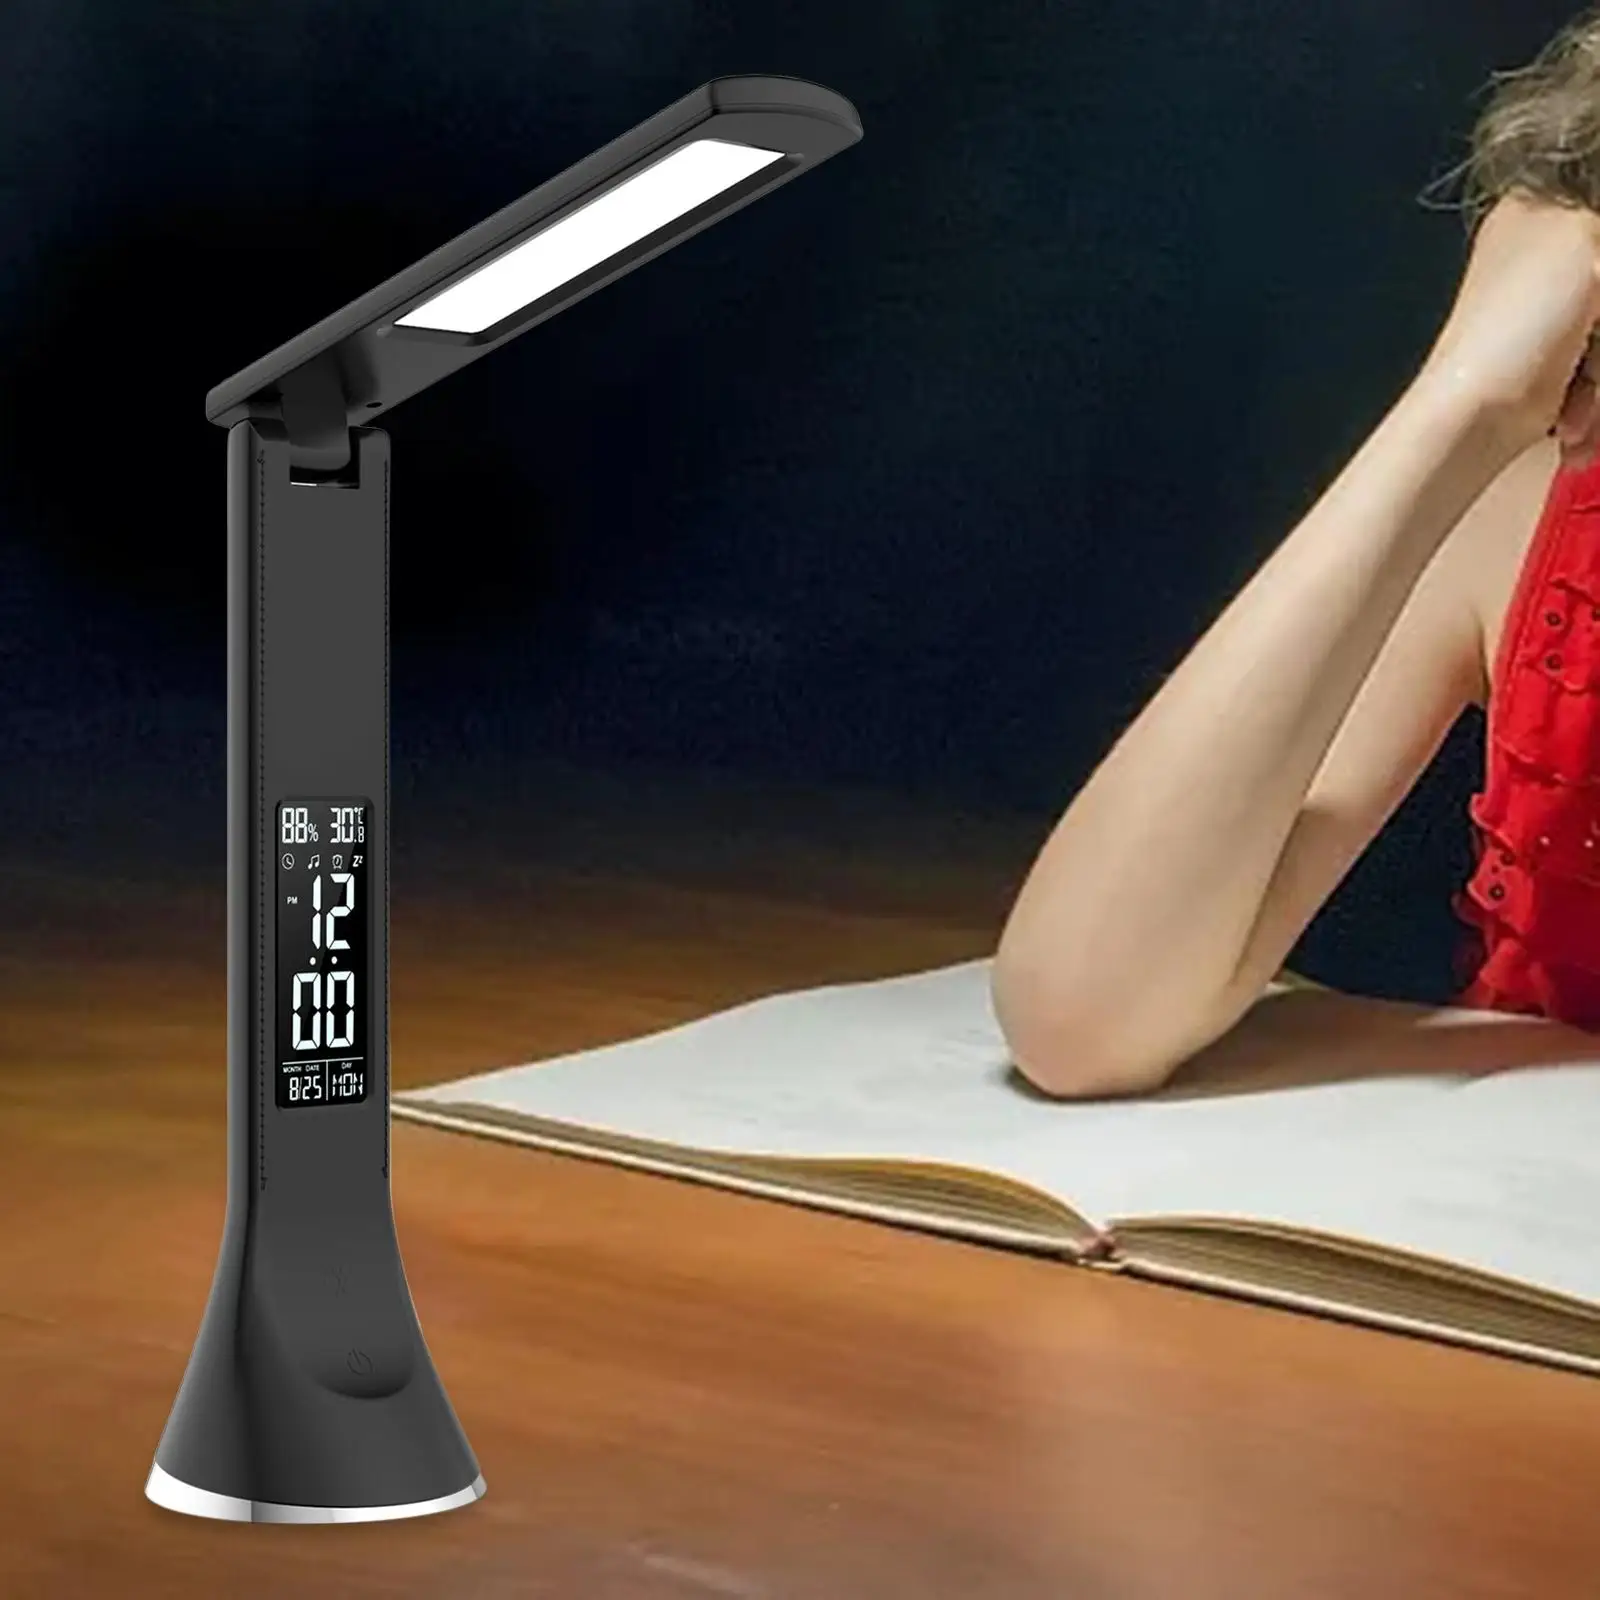 LED Desk Lamp Humidity Time Weeks Date Folded Alarm Clock Desktop Table Light Reading Light Room Home Bedroom Office Gift